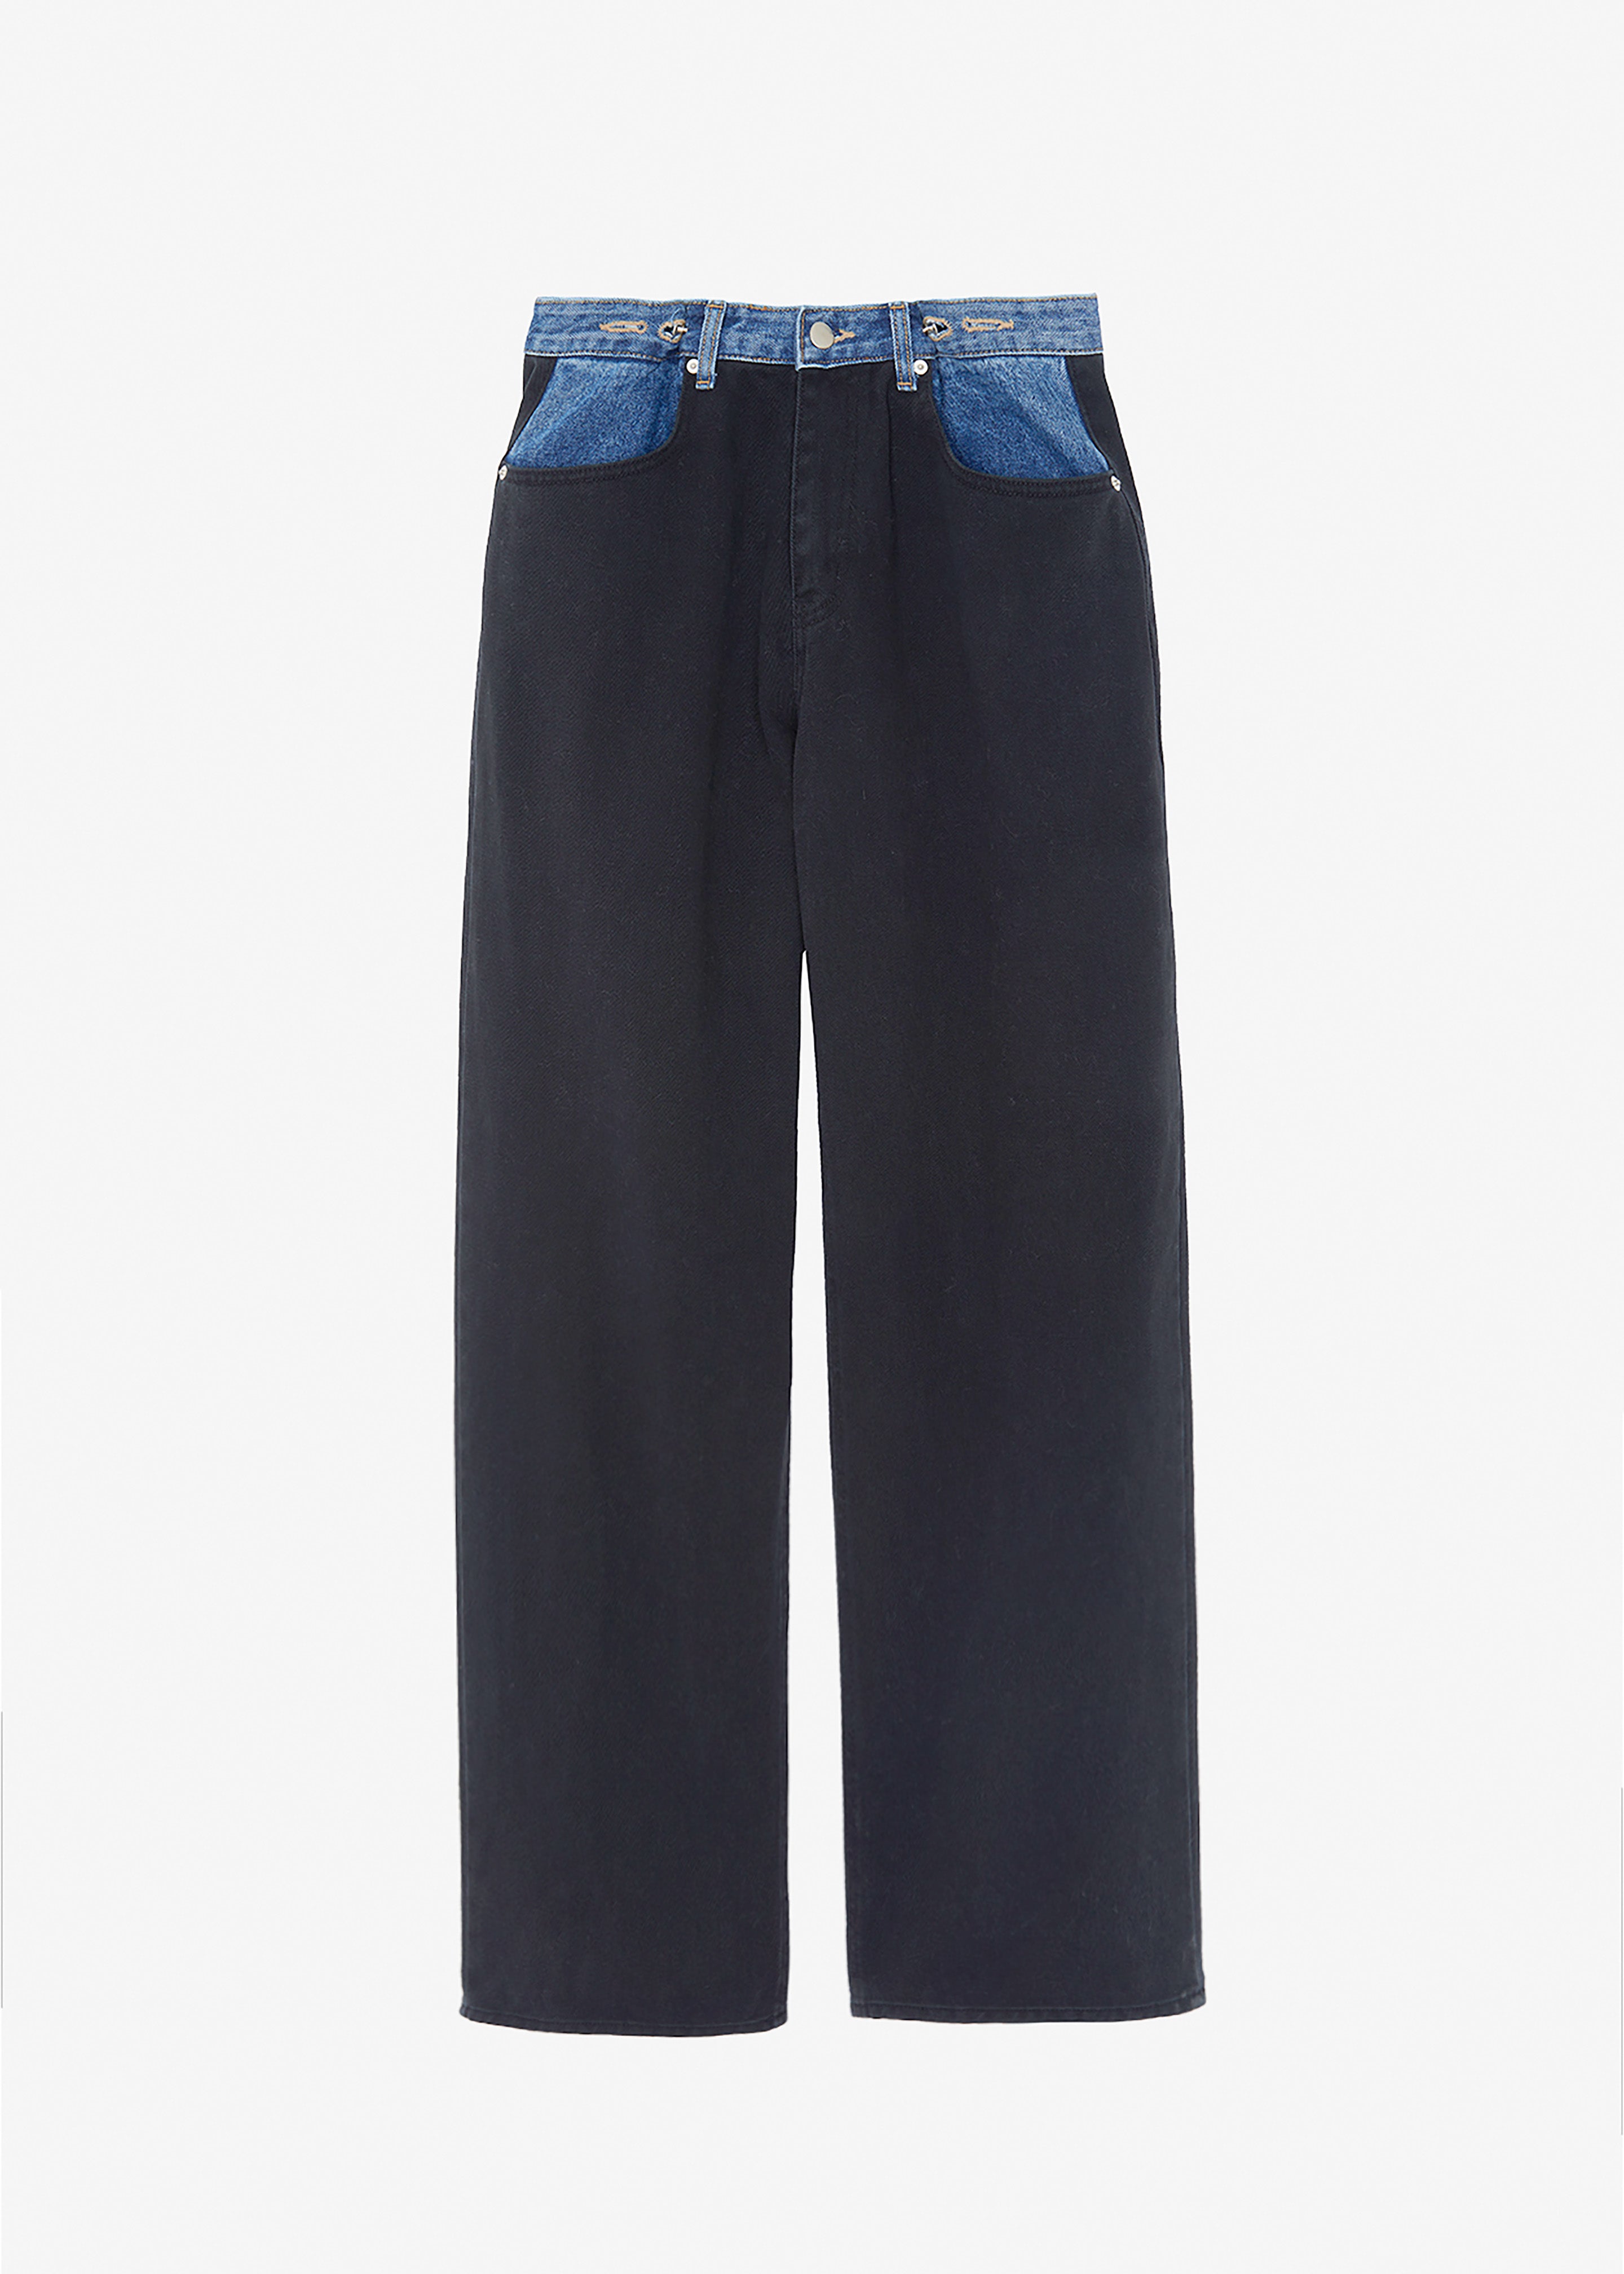 Hayla Contrast Denim Pants - Black/Blue - 11